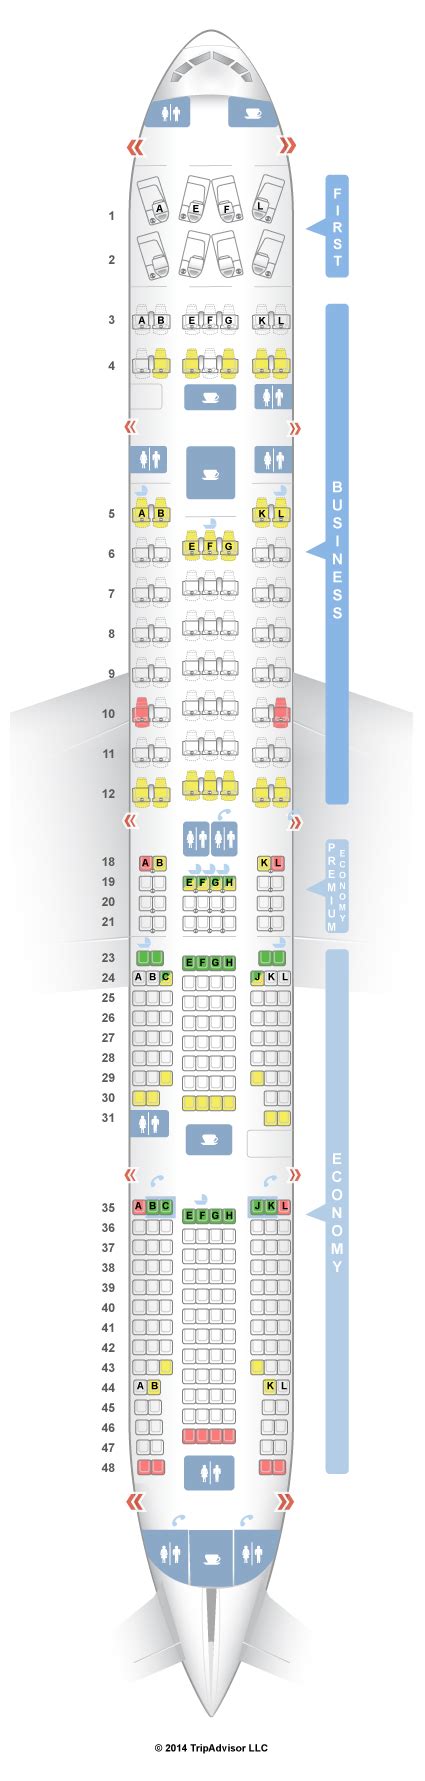 Seatguru Seat Map Air France Boeing 777 300er 77w Four Class